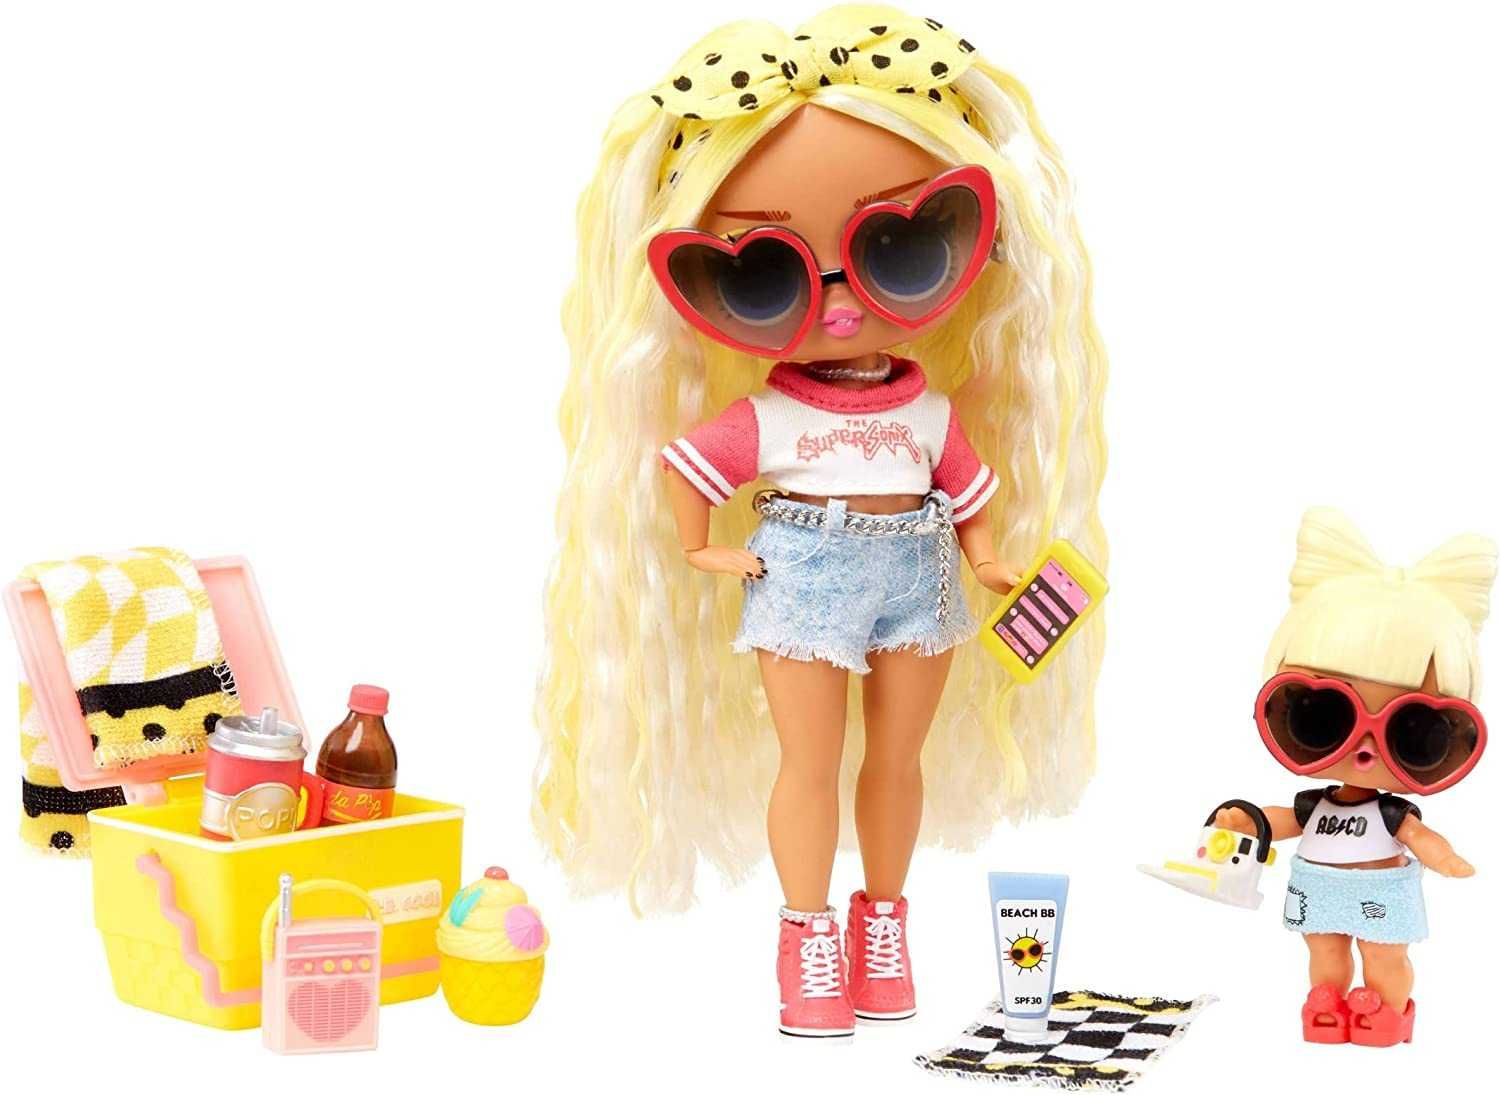 Кукла Лол L.O.L. Surprise! Tweens Babysitting Beach Party 2 куклы США